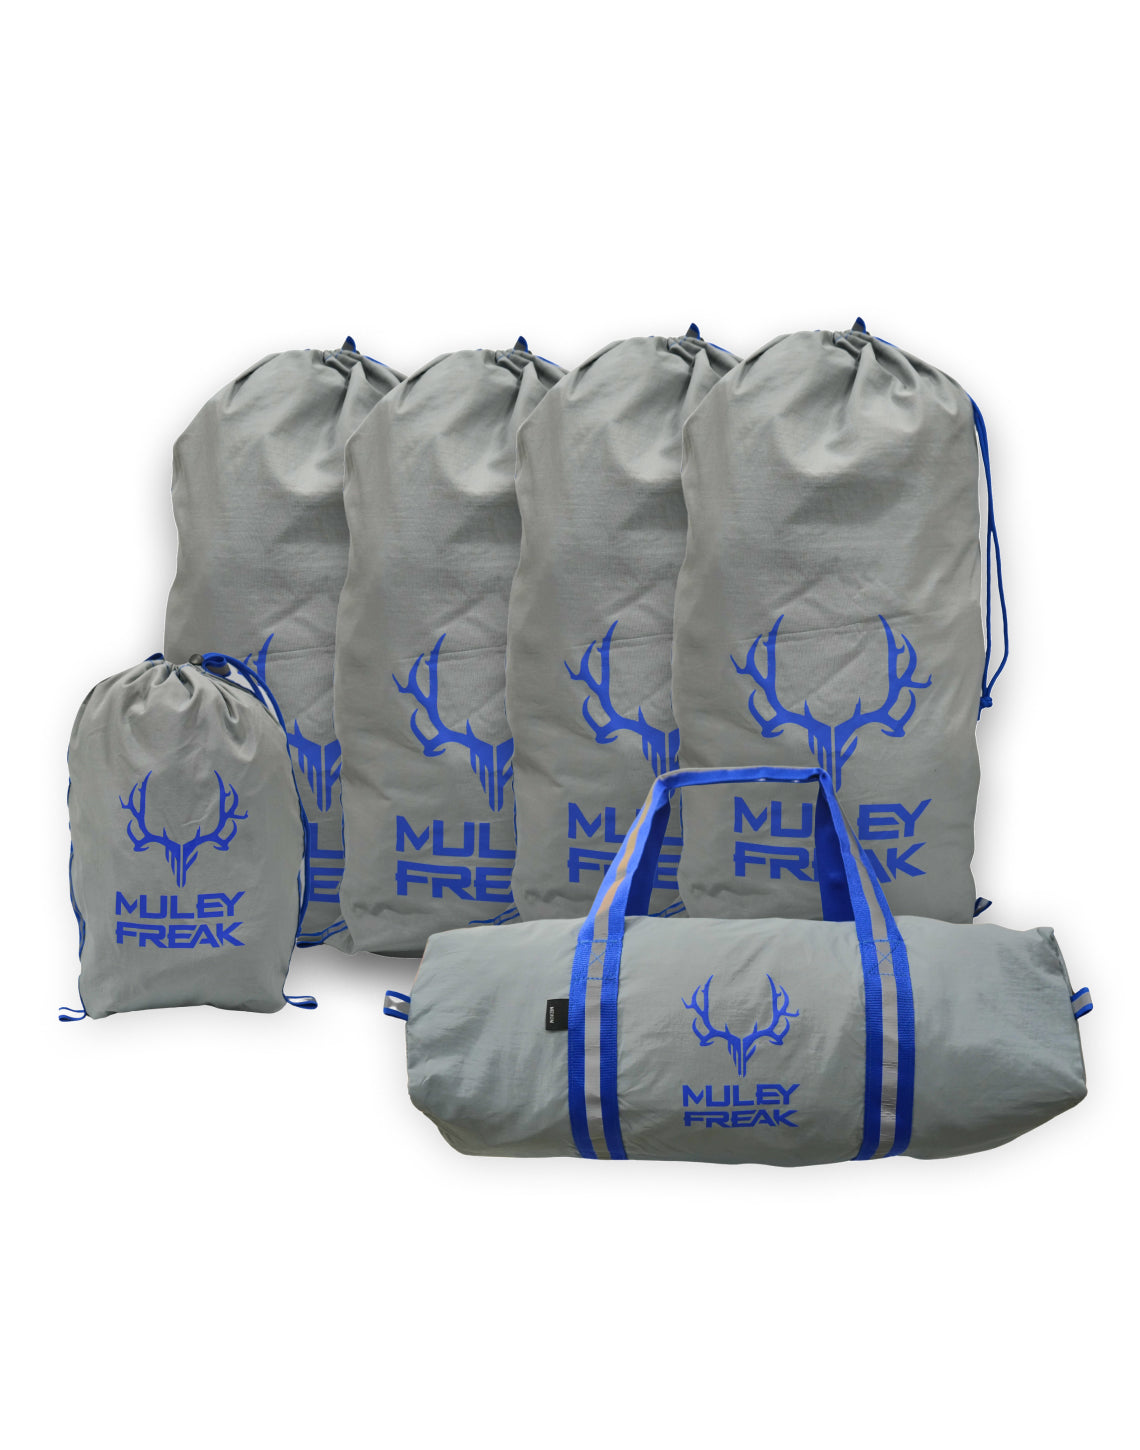 Comprehensive Muley Freak Game Bag Set for efficient meat care.